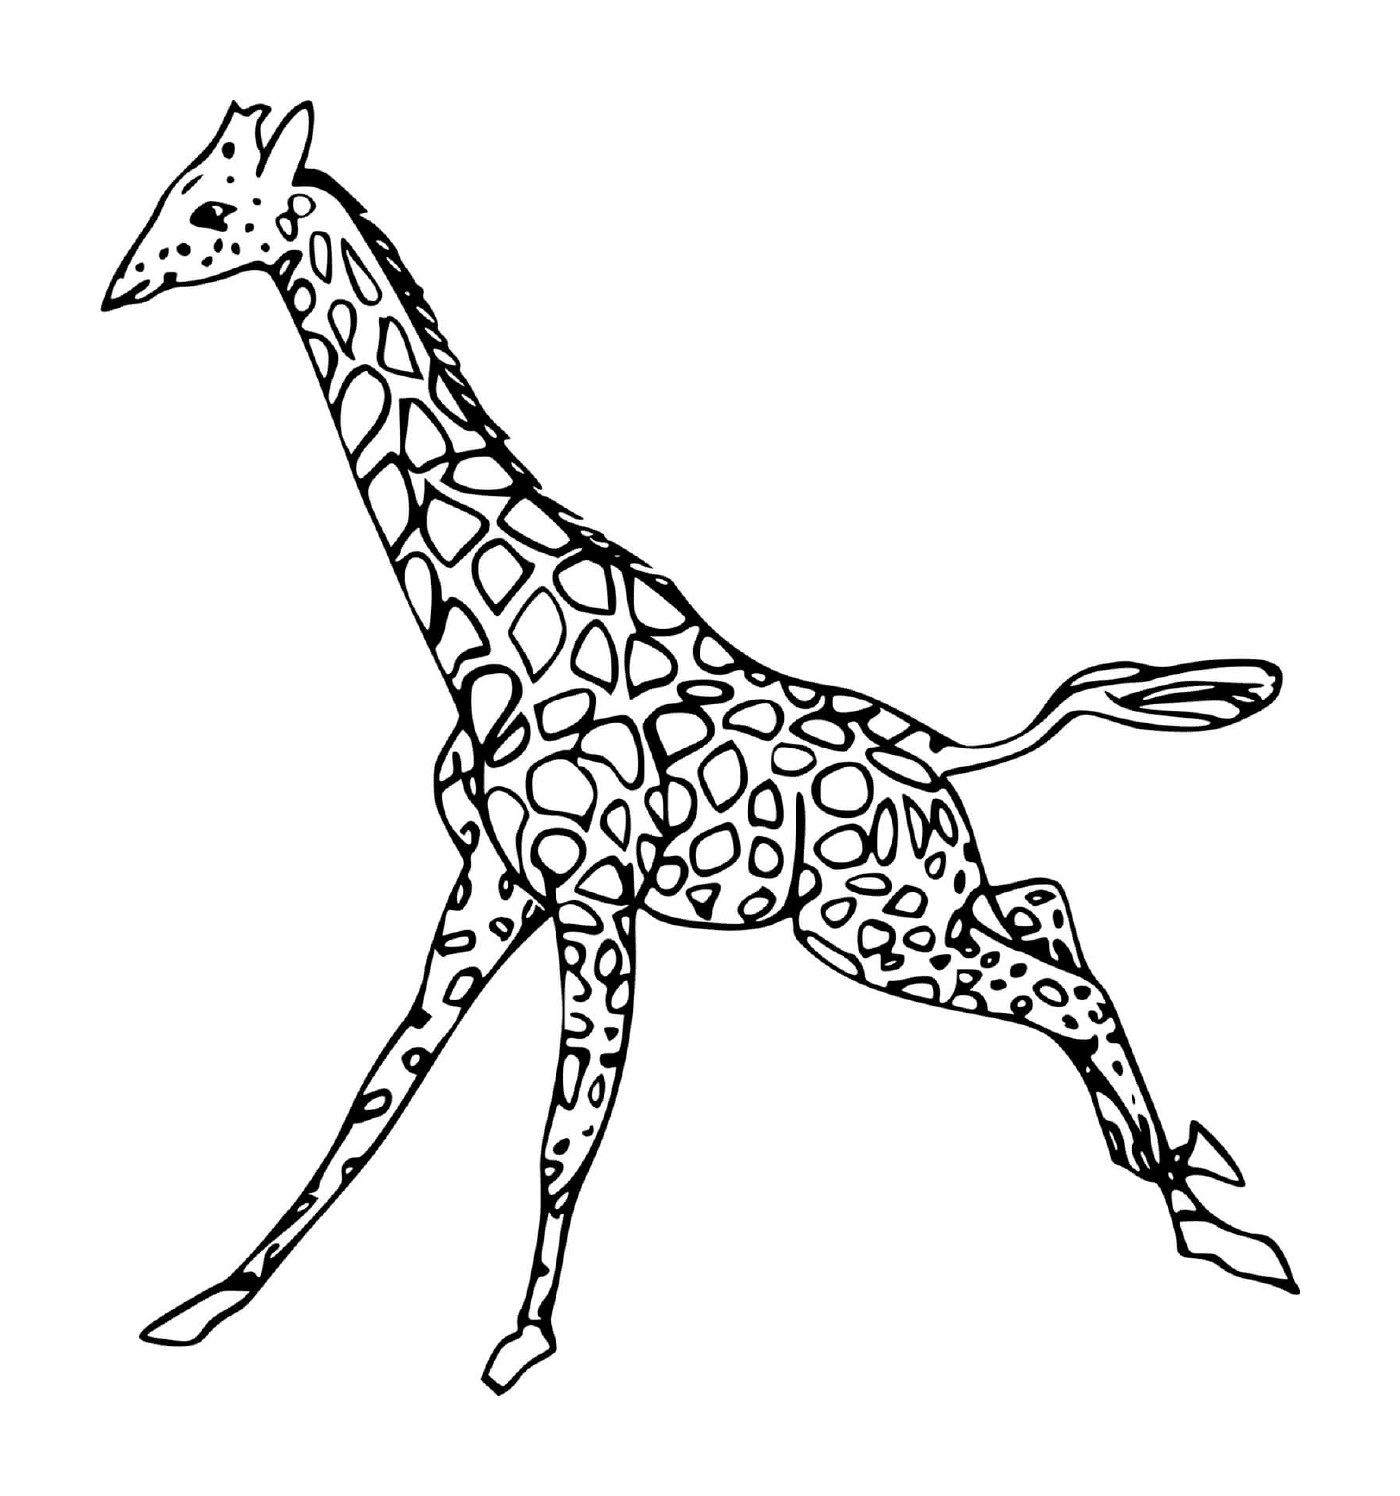  Girafe corriendo 